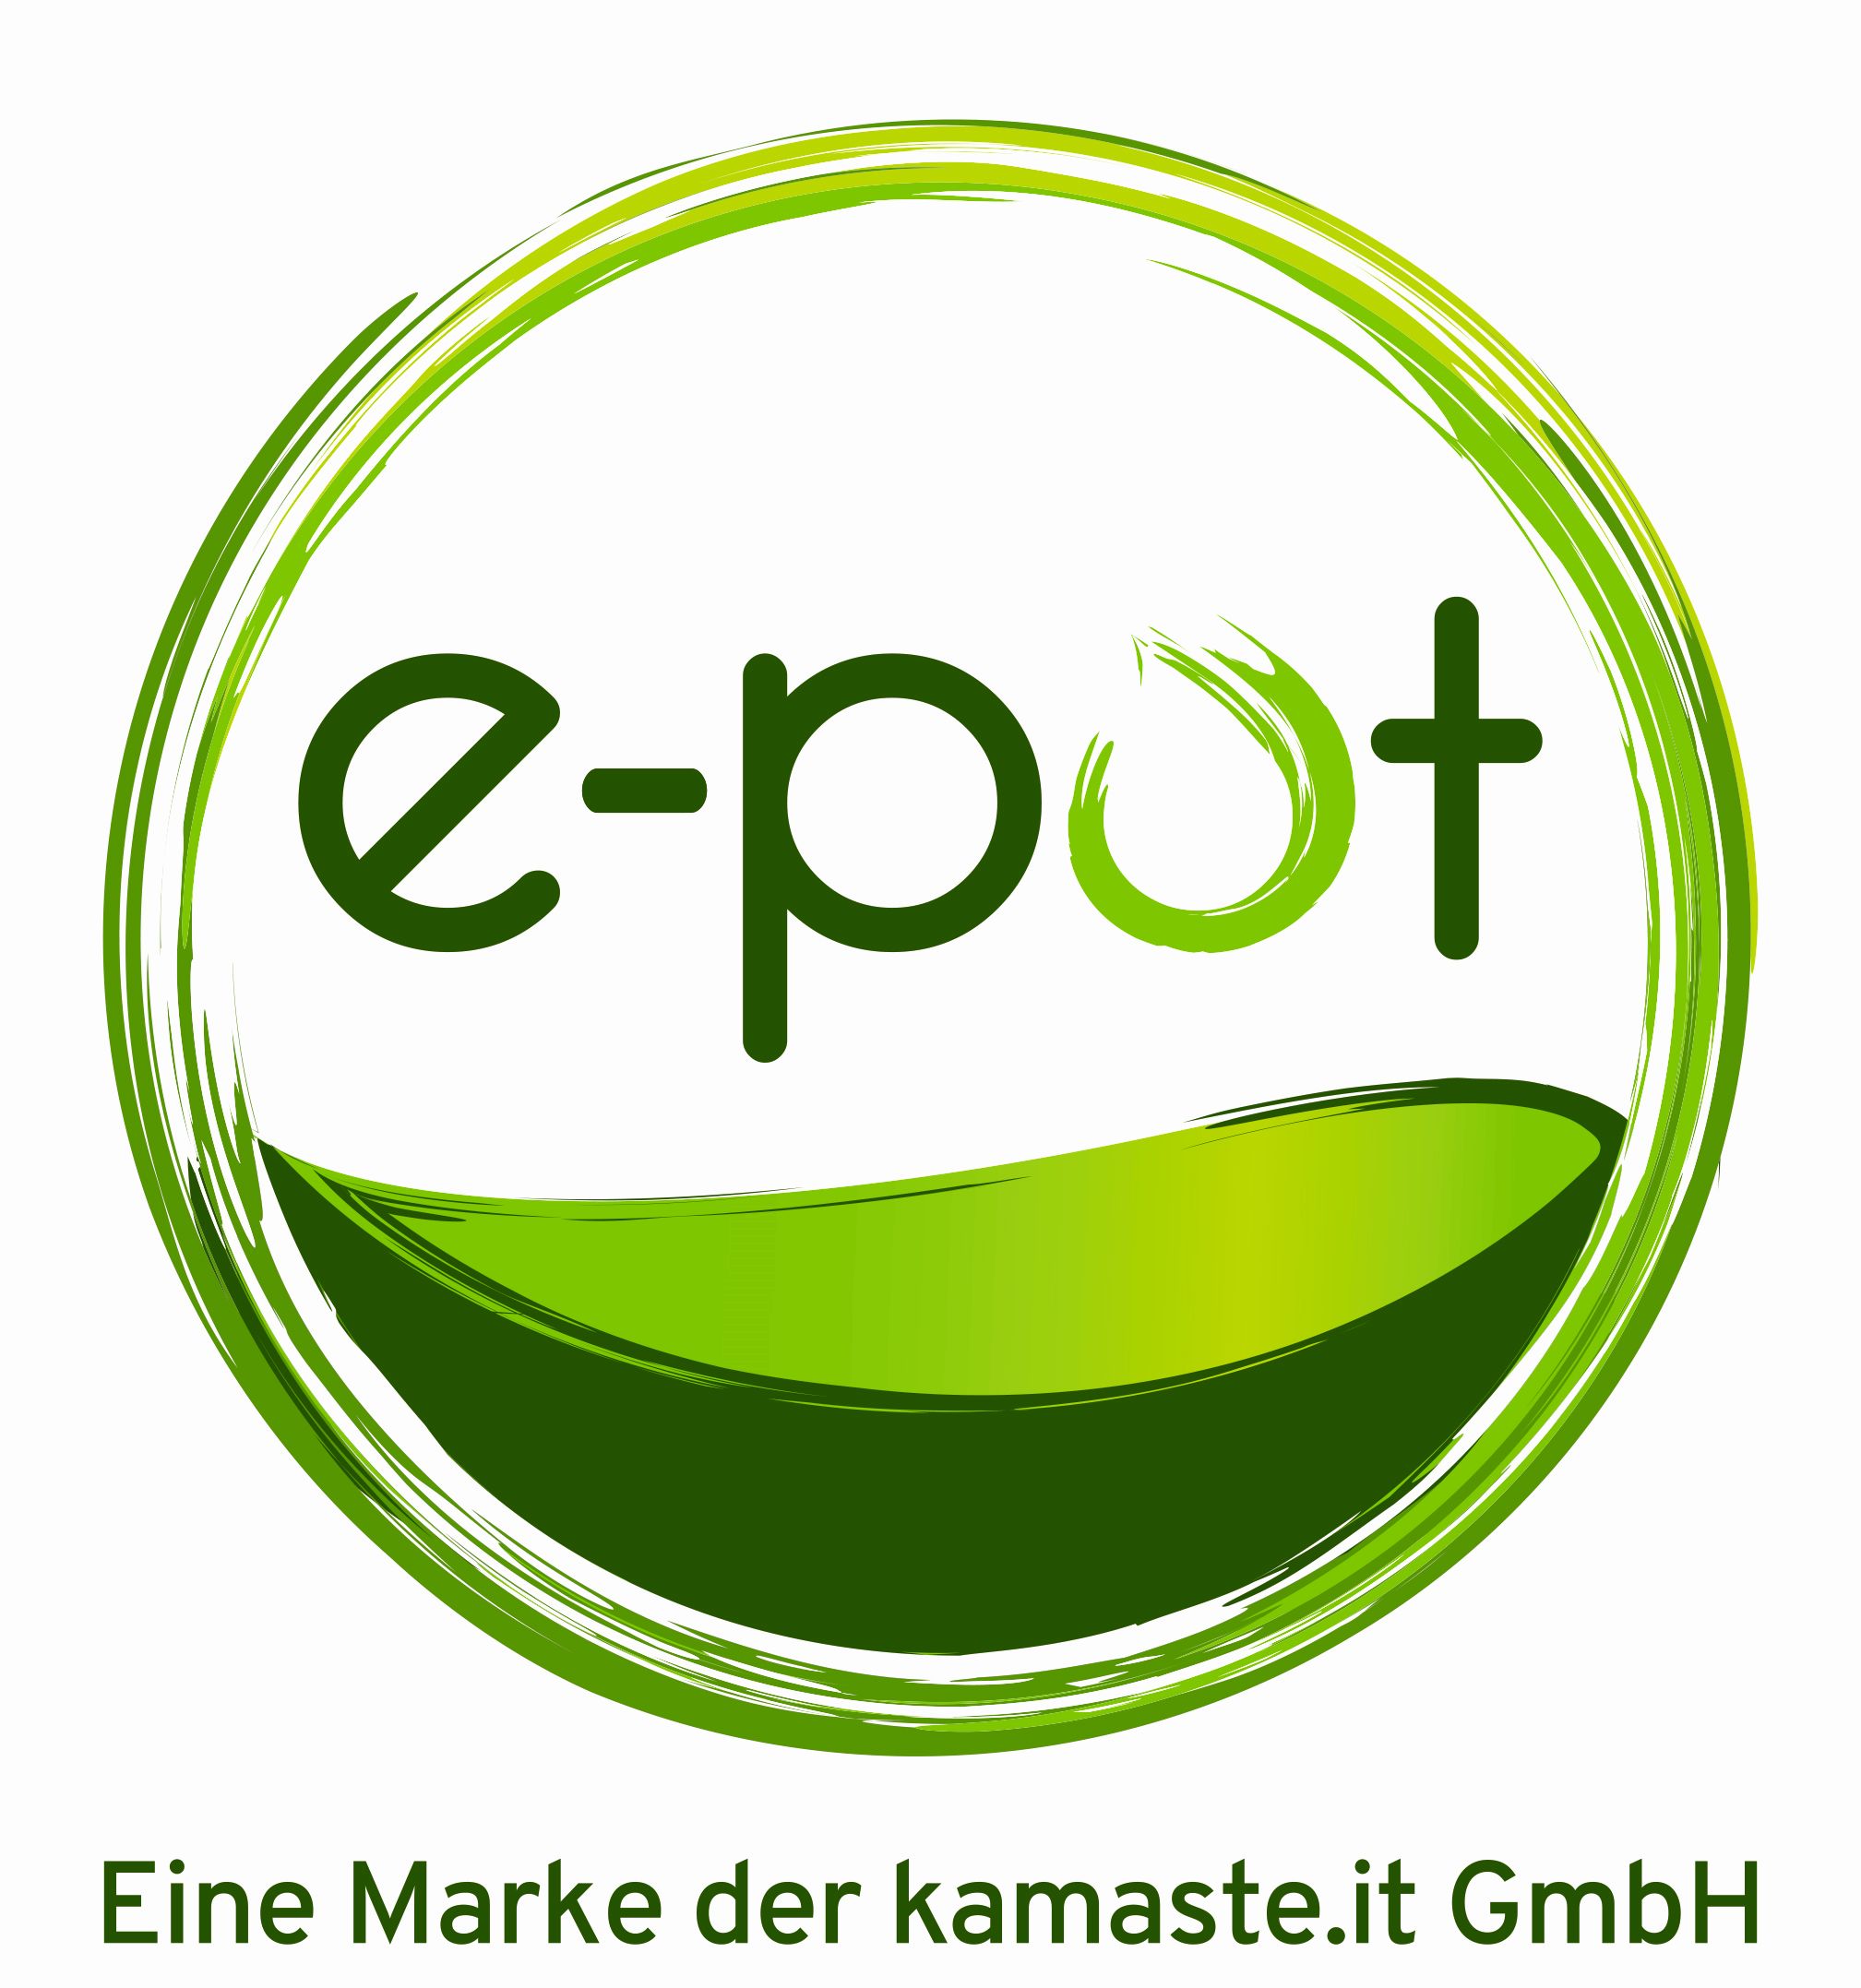 HEINZ Elektrotechnik Ihr e-pot Vertriebspartner im Donnersbergkreis